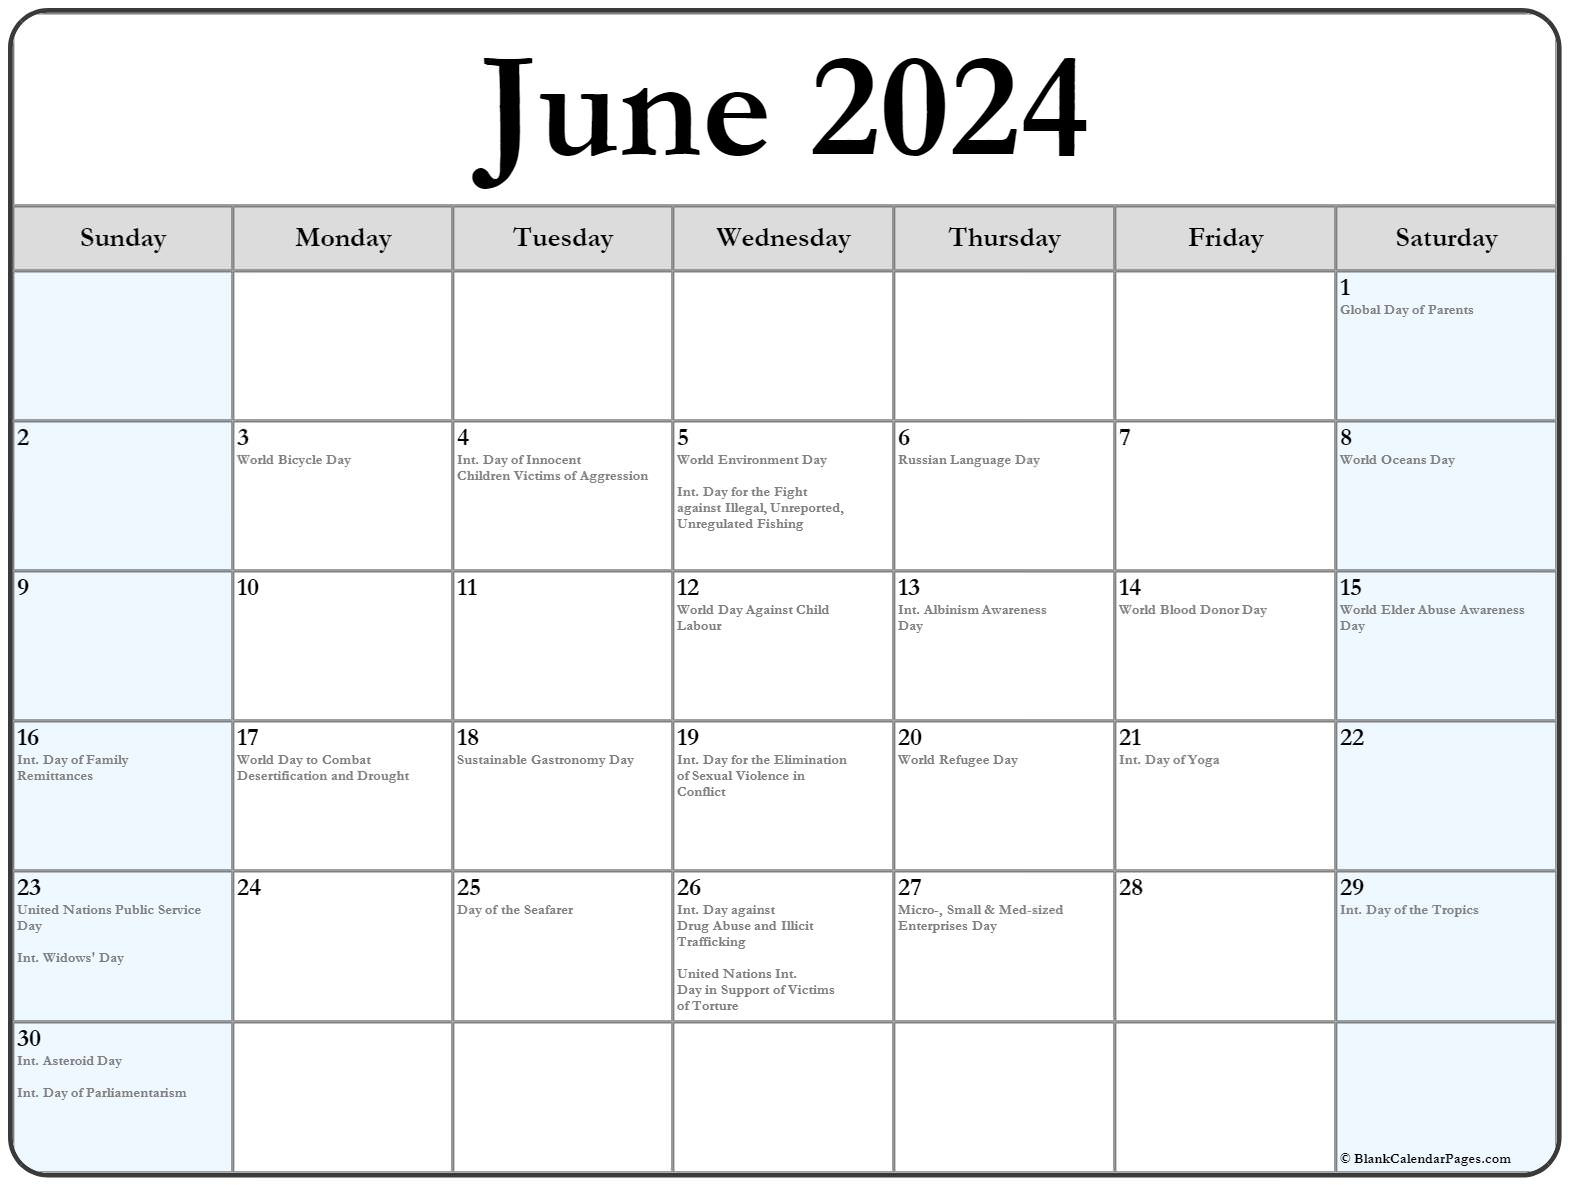 June 2024 With Holidays Calendar regarding National Day Calendar For June 2024